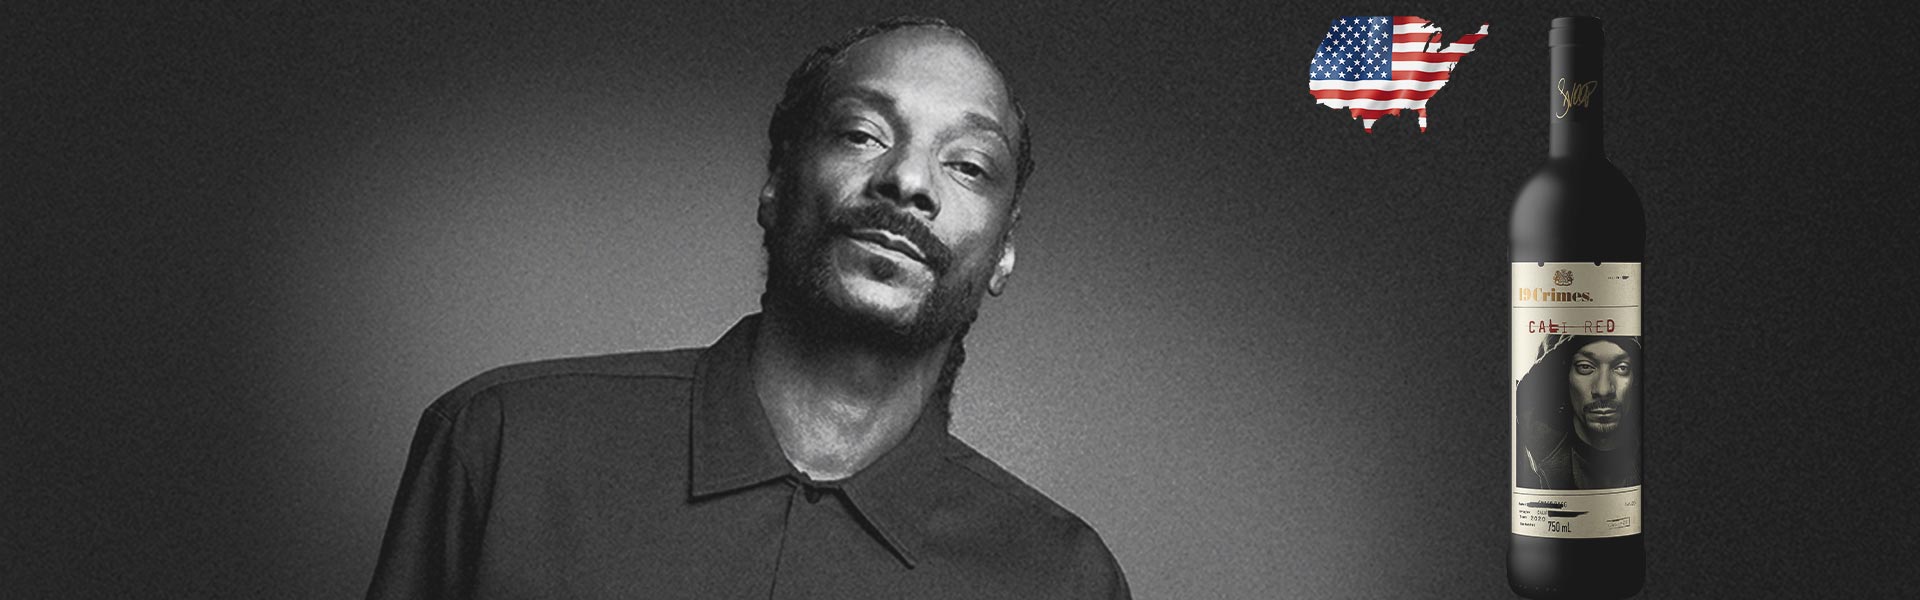 Snoop Dogg - 19 CRIMES SNOOP CALI RED